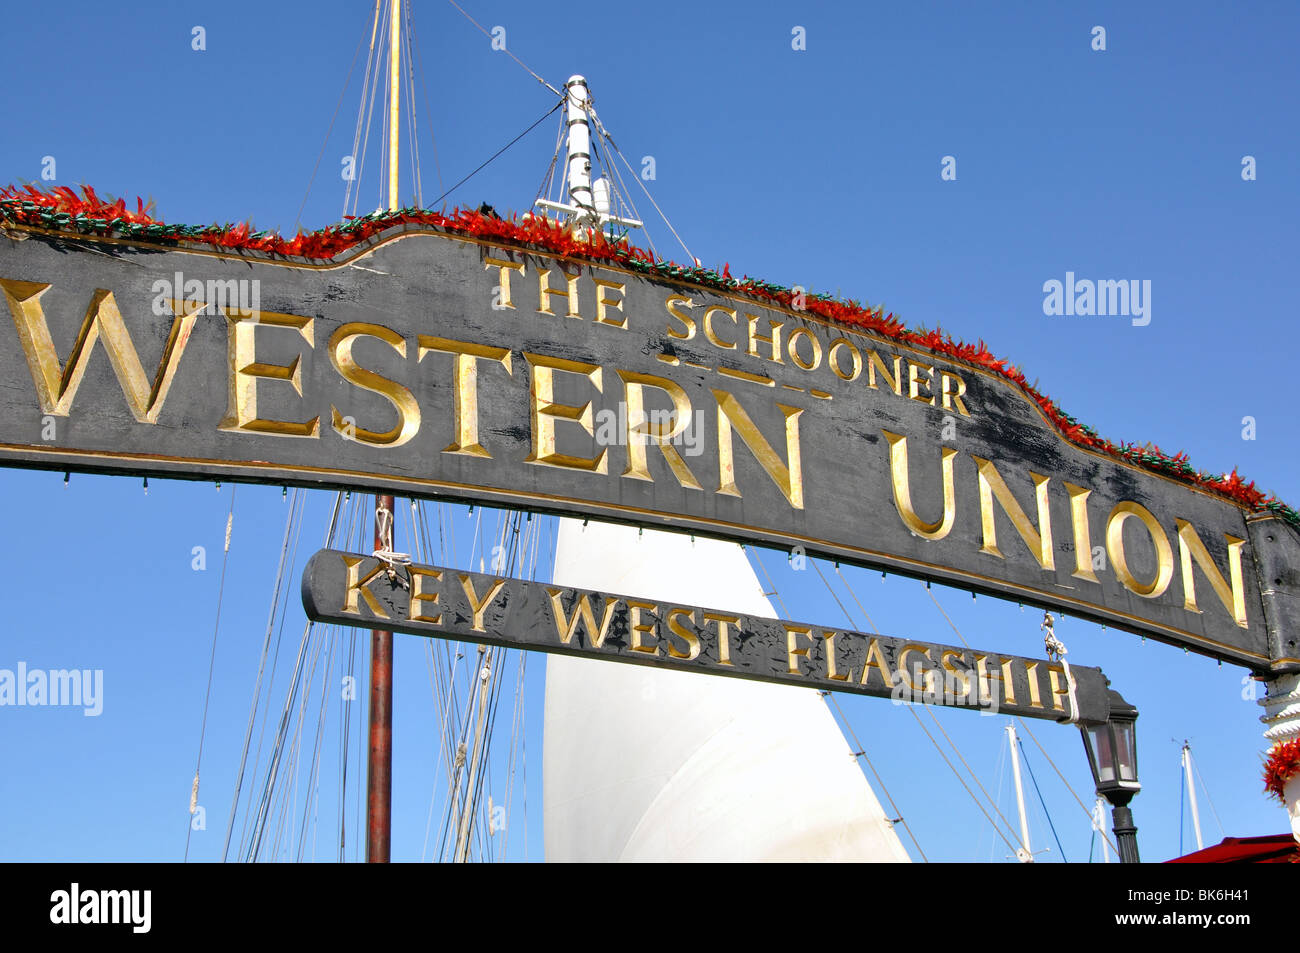 Florida Memory • Historic schooner Western Union - Key West, Florida.